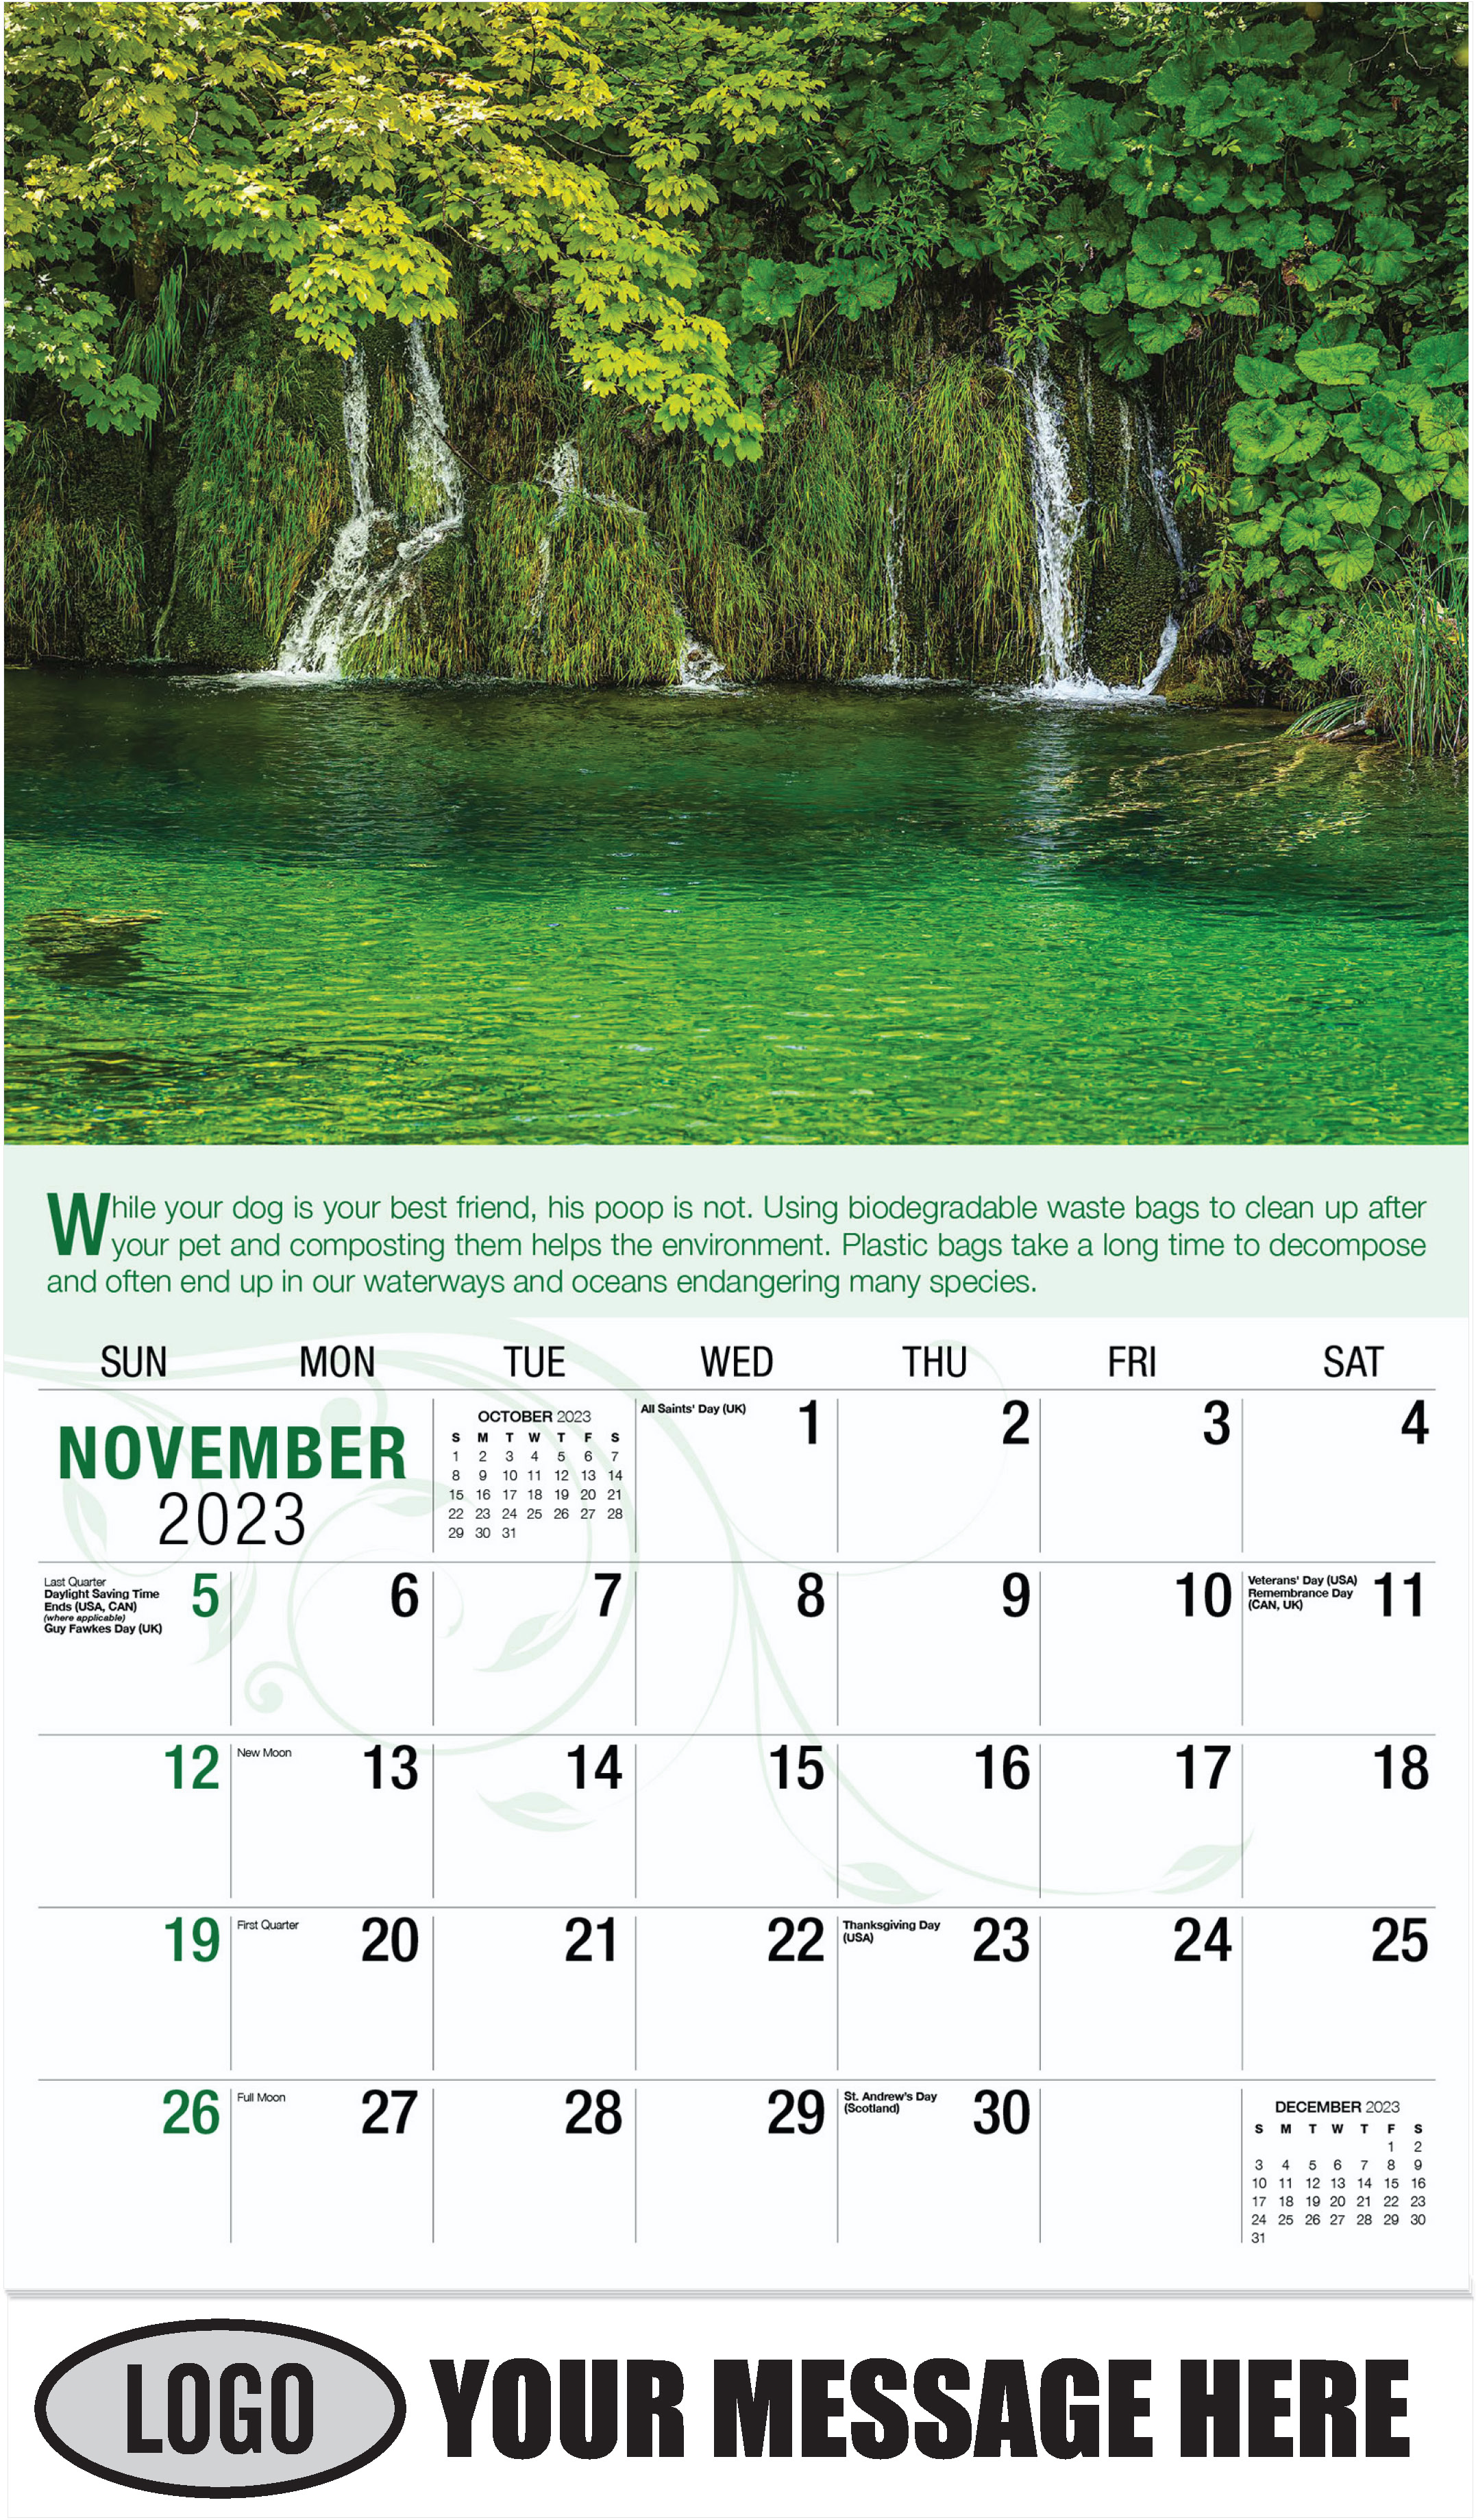 Plitvice Lakes National Park UNESCO World Heritage, Croatia - November - Go Green 2023 Promotional Calendar